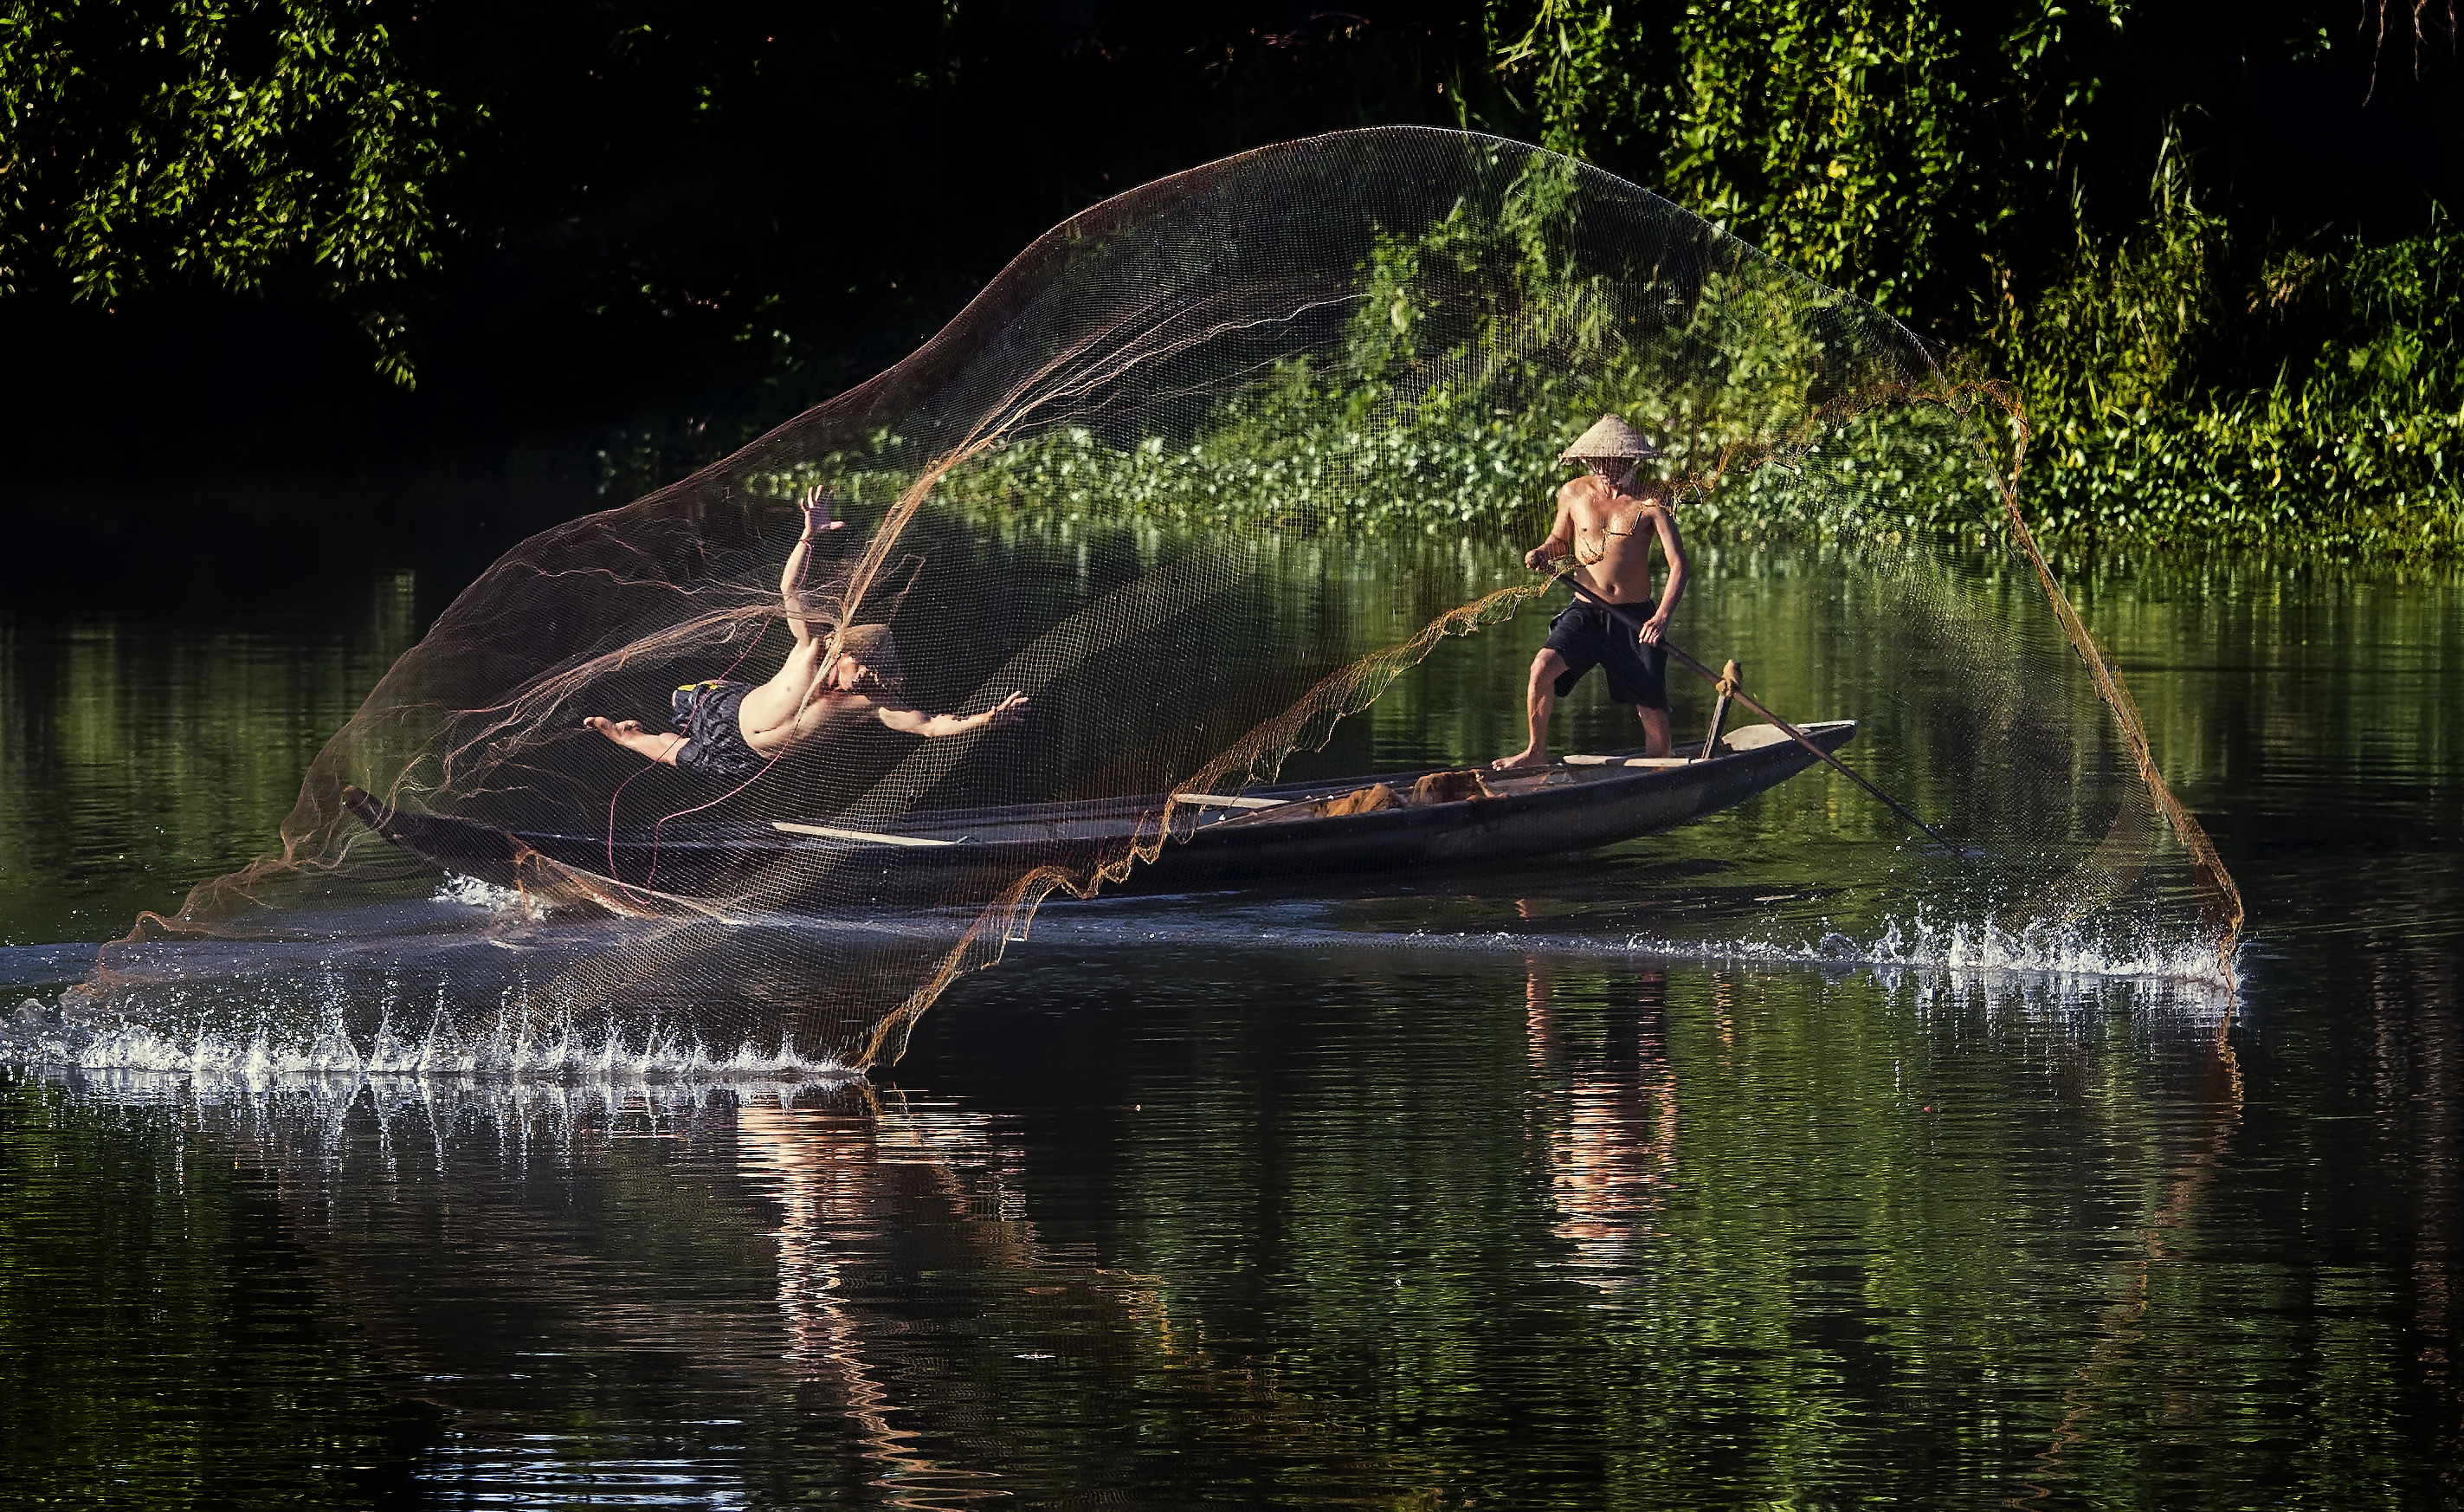 A photo by Nese Ari captured two fishermen in Vietnam